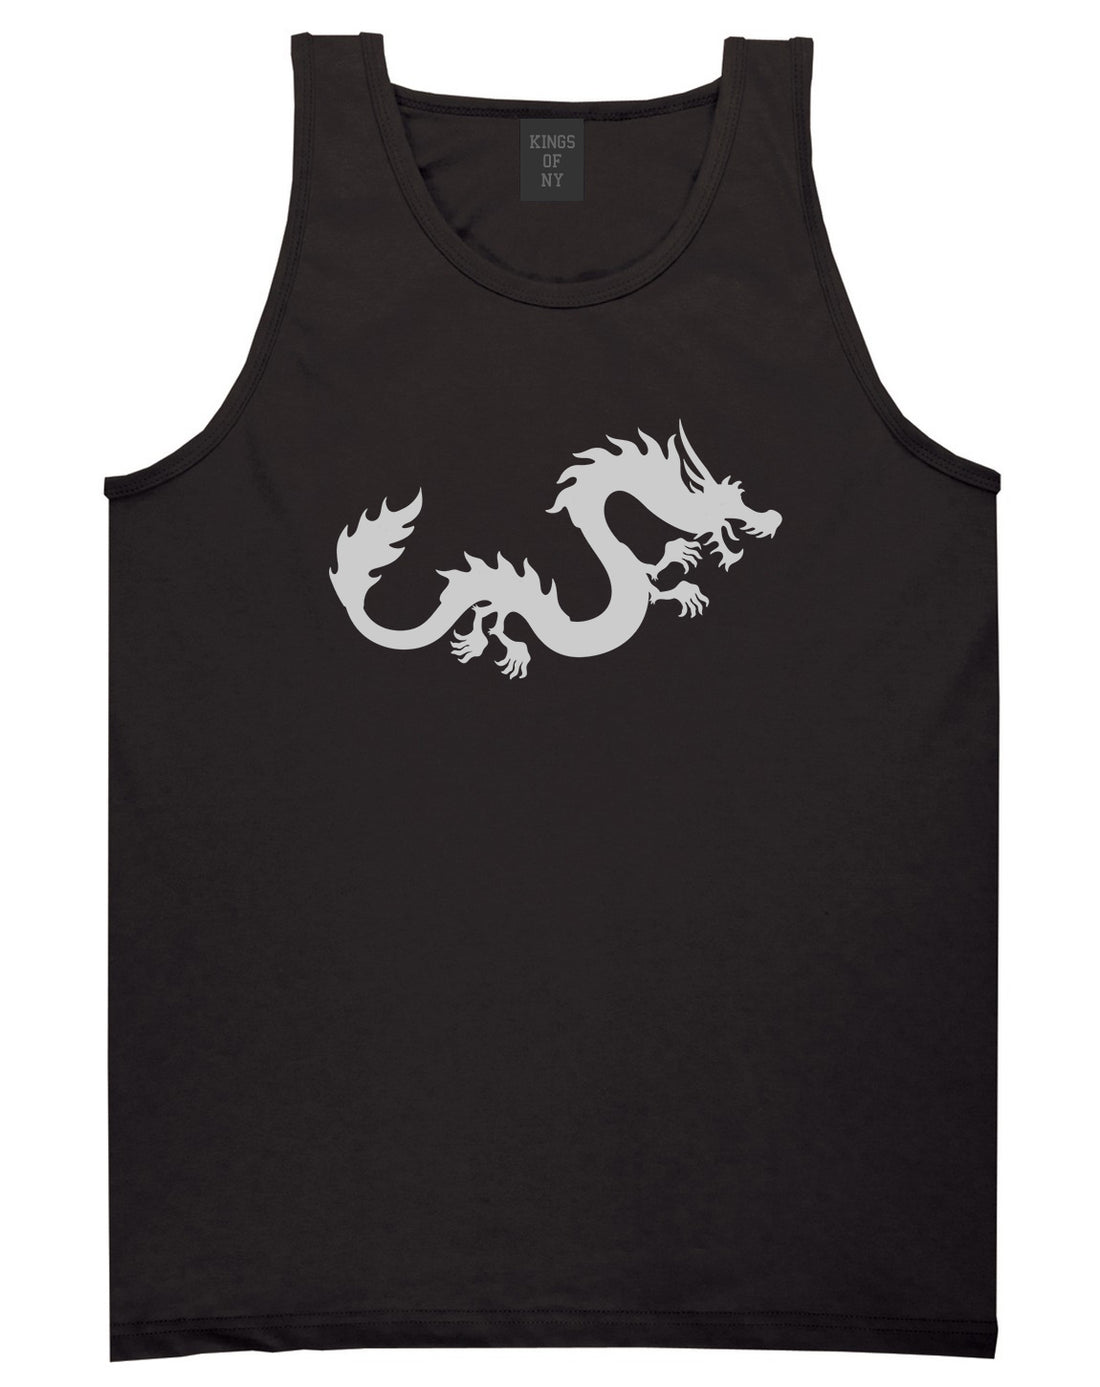 Chinese Dragon Black Tank Top Shirt by Kings Of NY